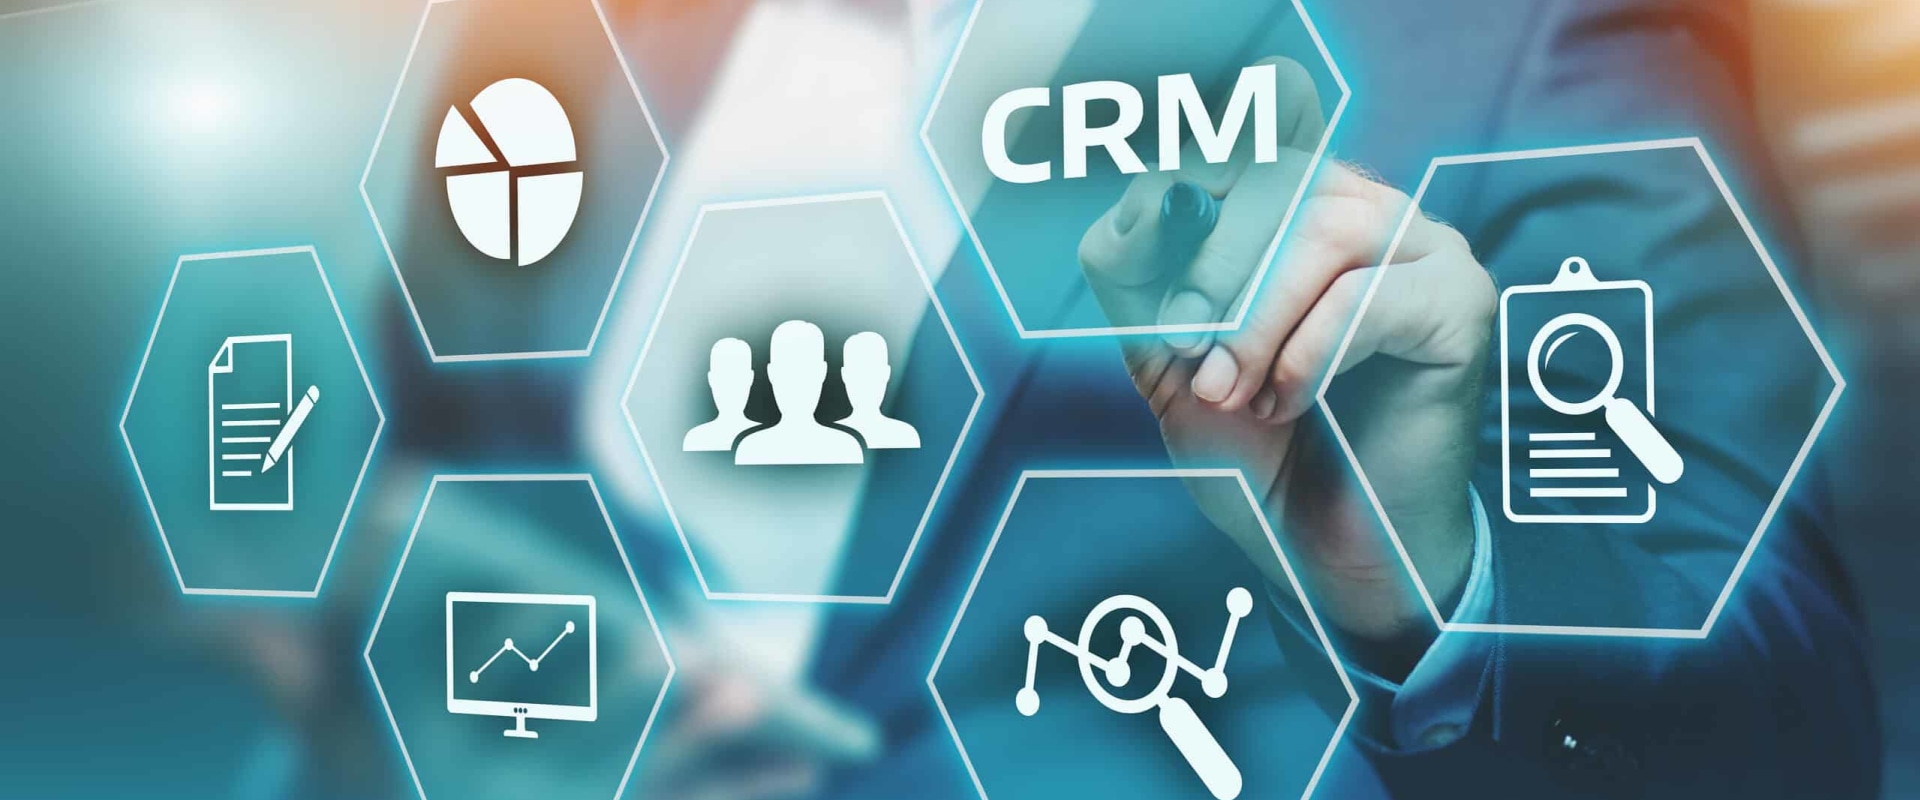 Exploring Customer Relationship Management (CRM) Solutions